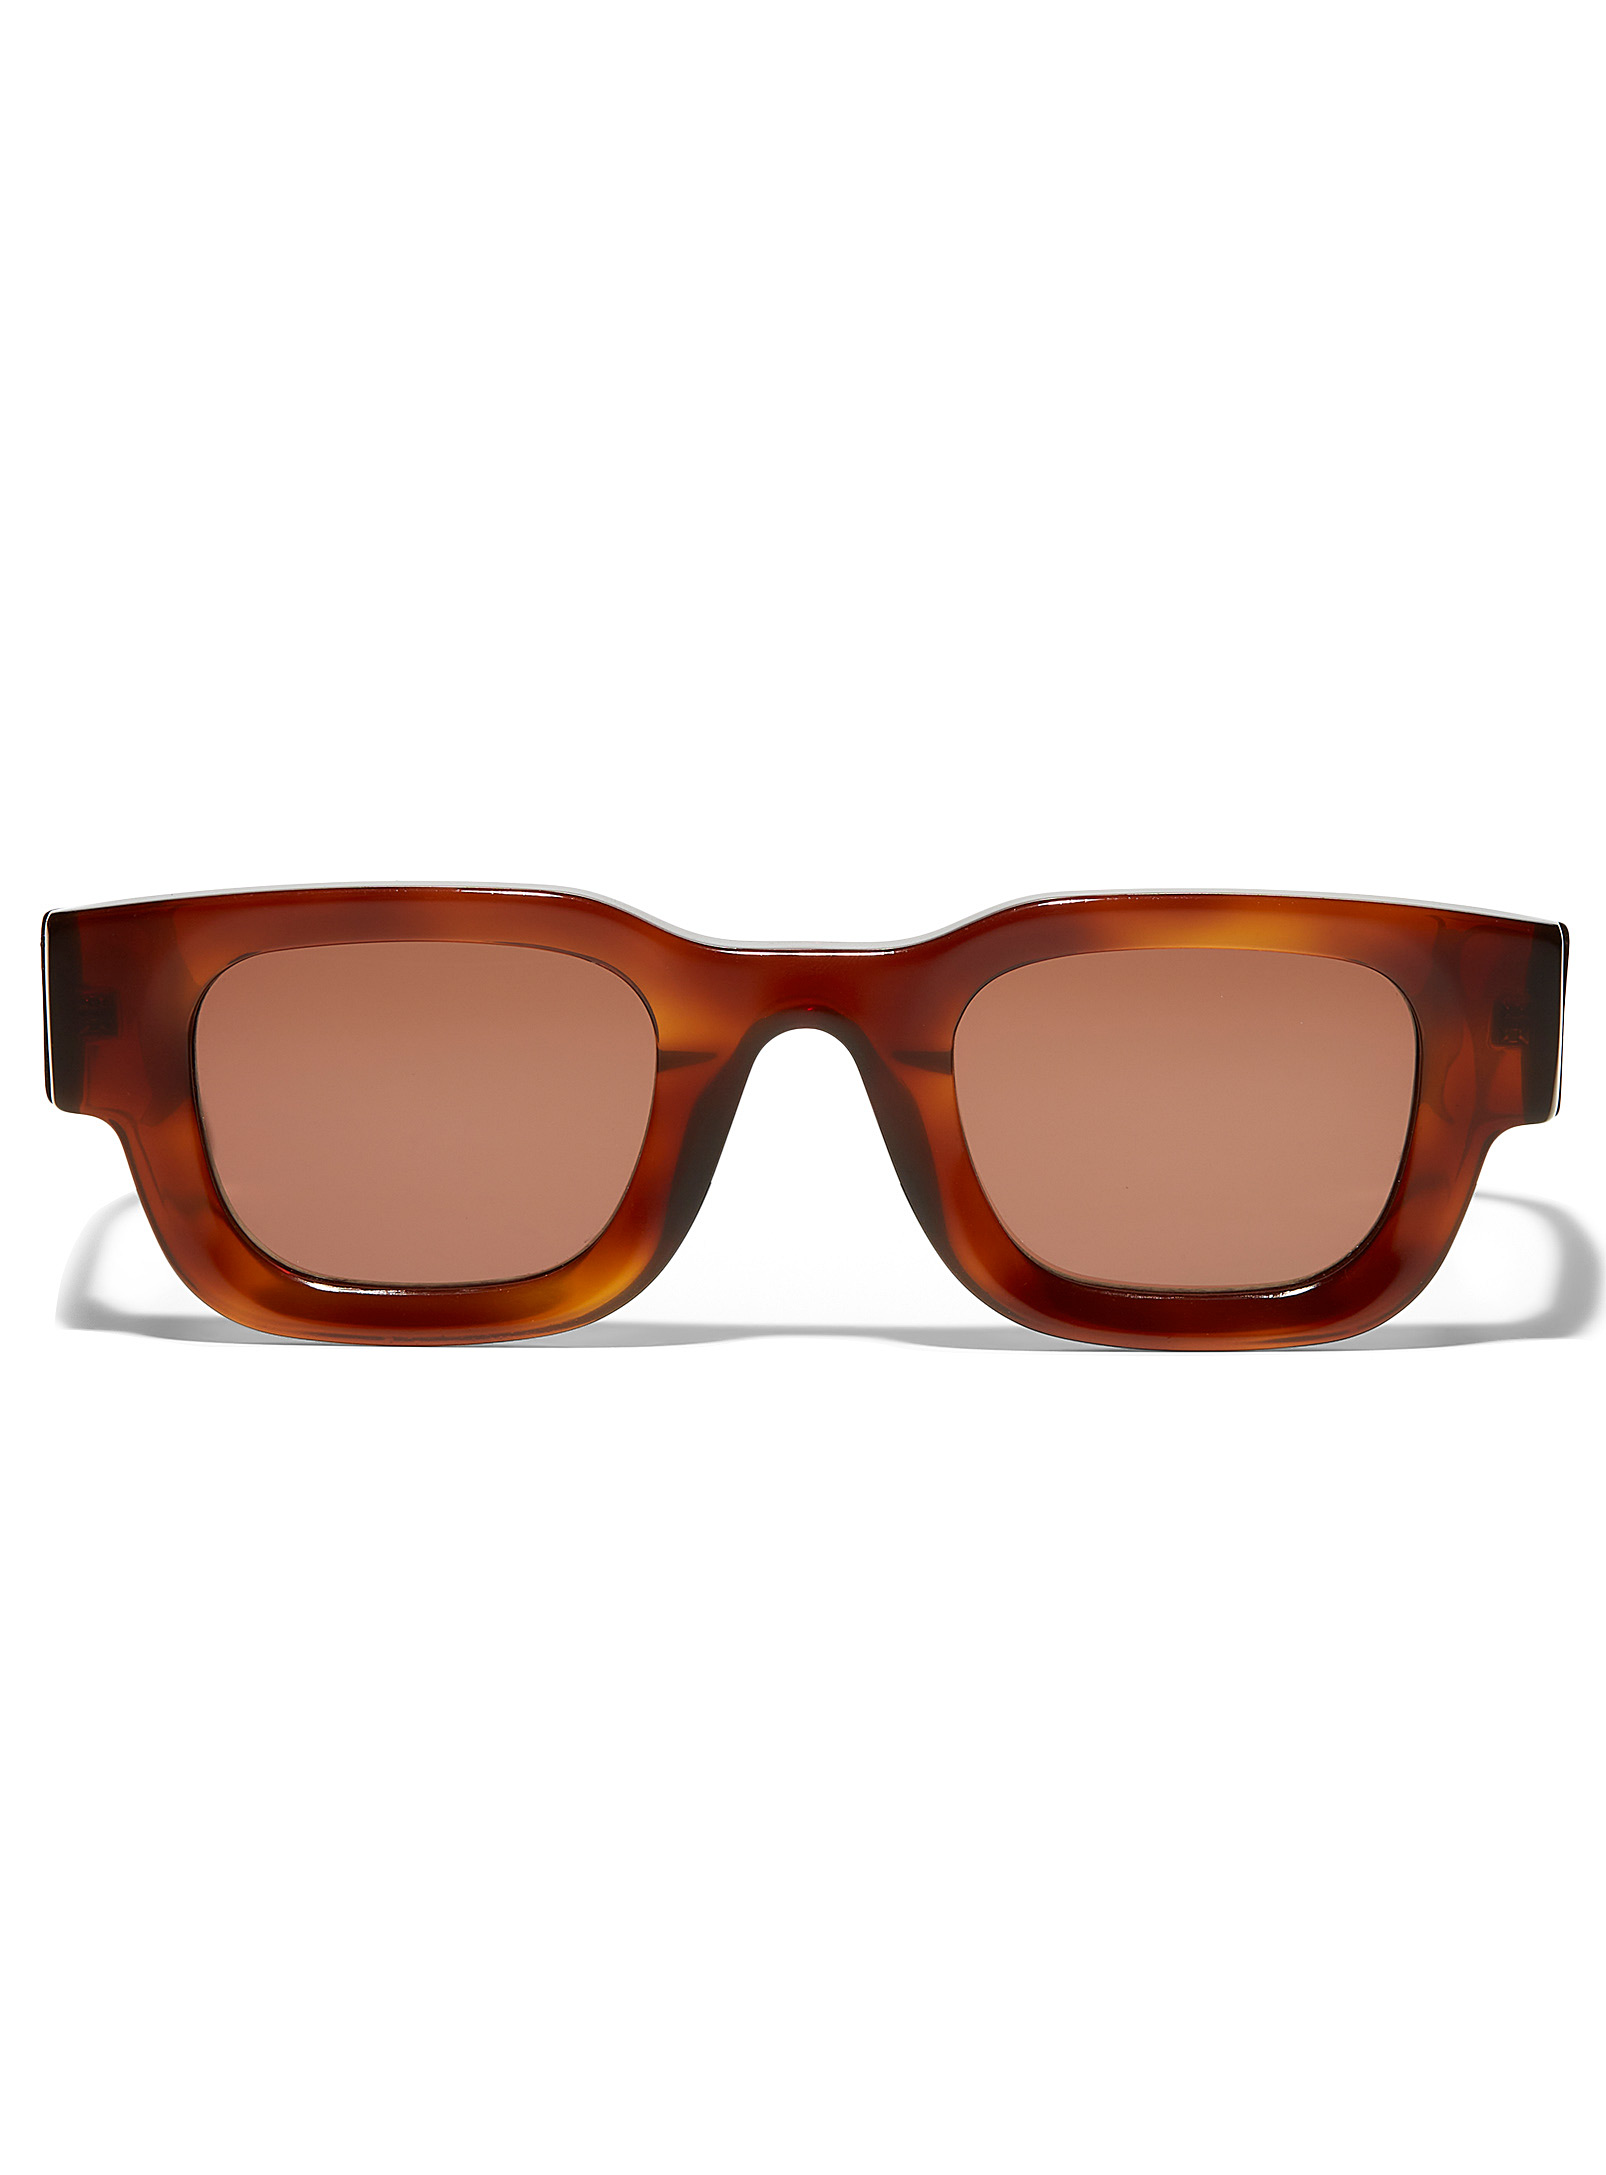 French Kiwis Valentin Rectangular Sunglasses In Brown